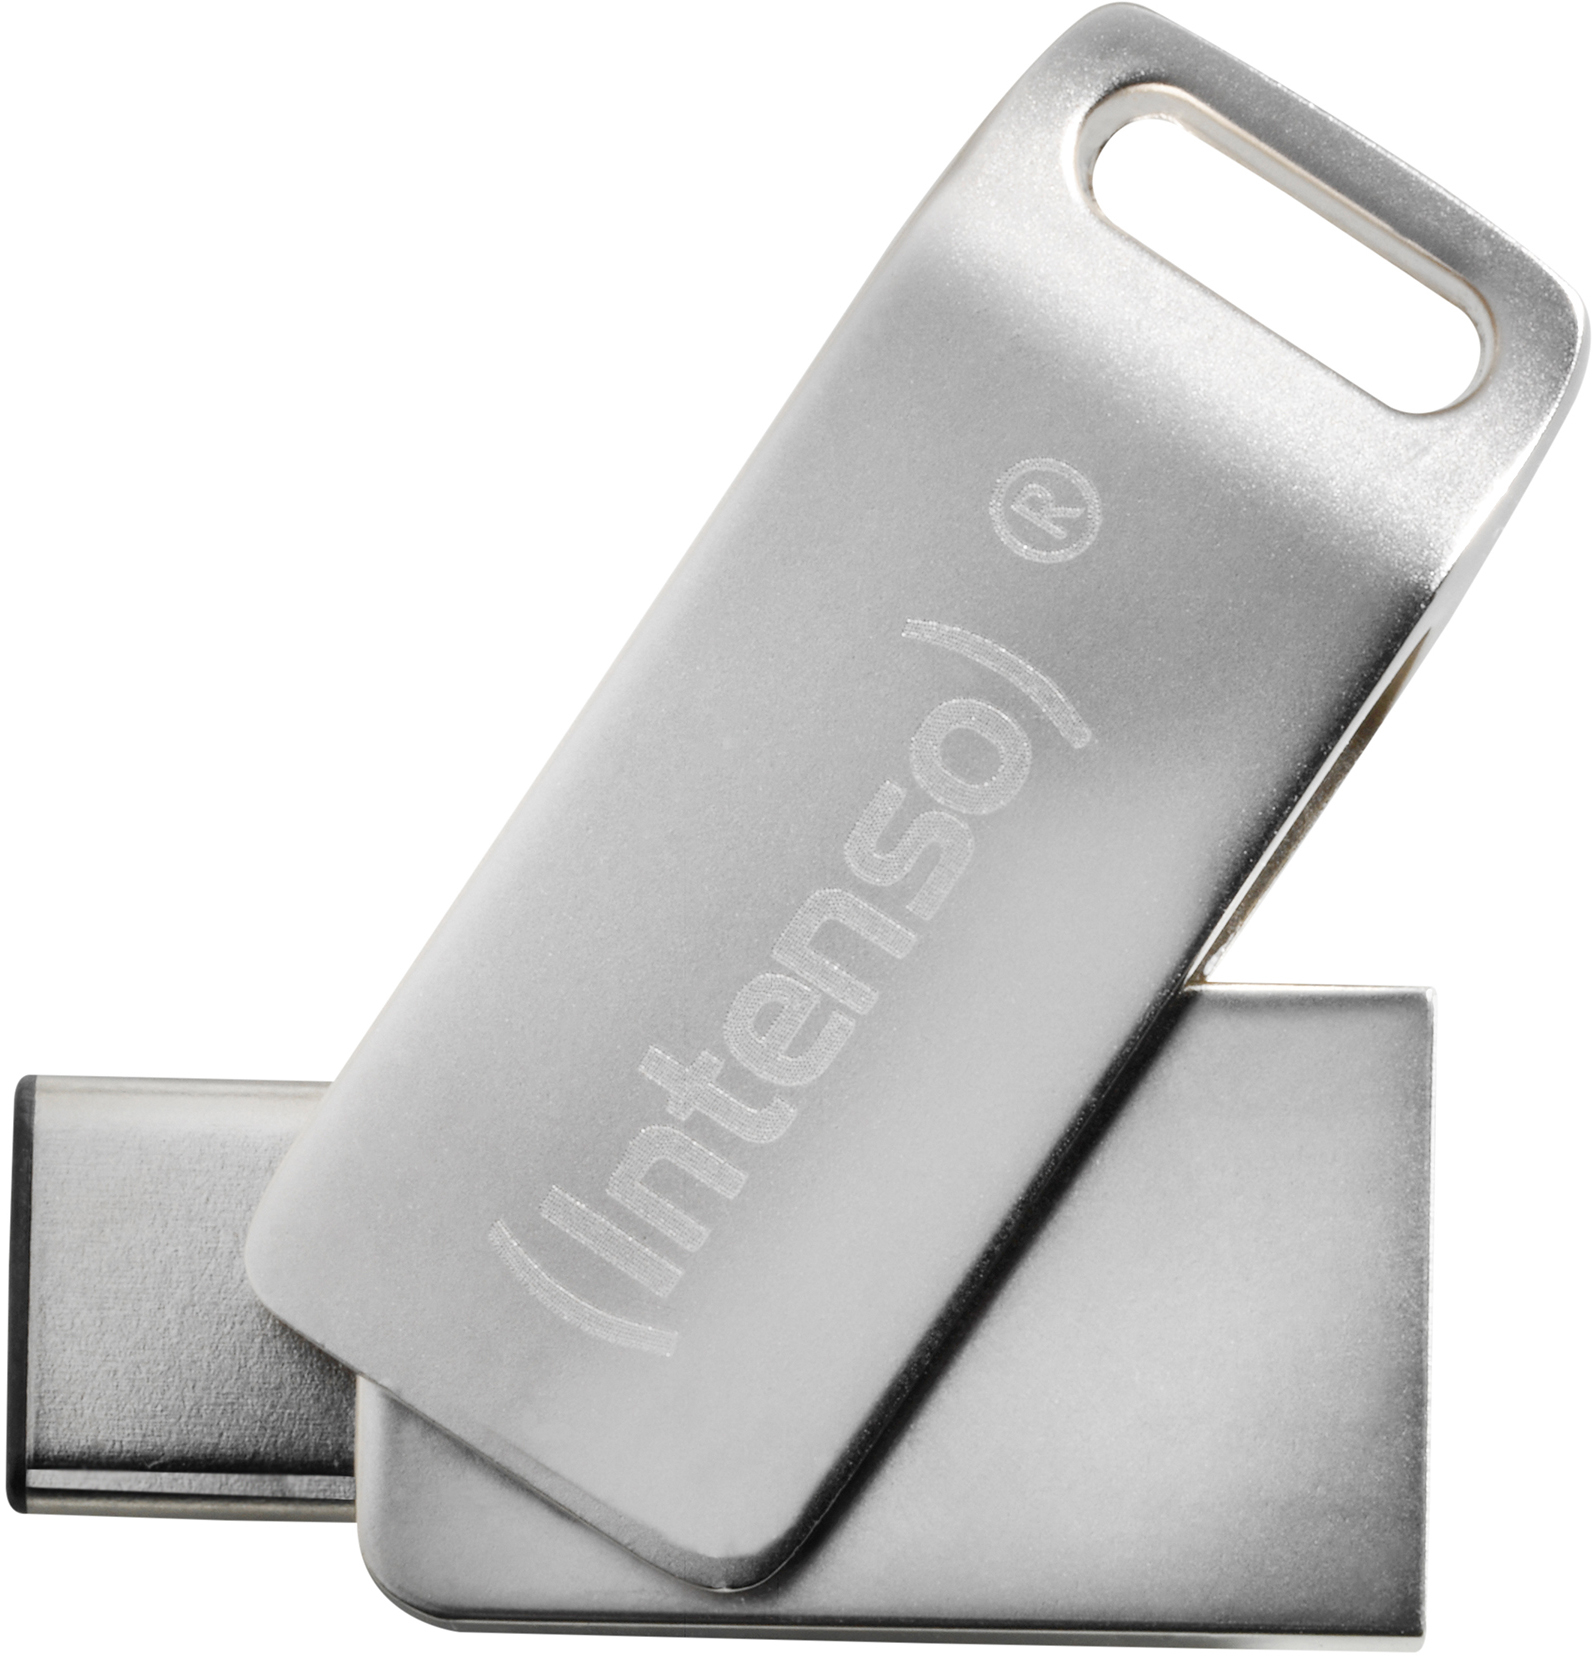 INTENSO USB-Stick Type C 32GB 3536480 USB 3.0